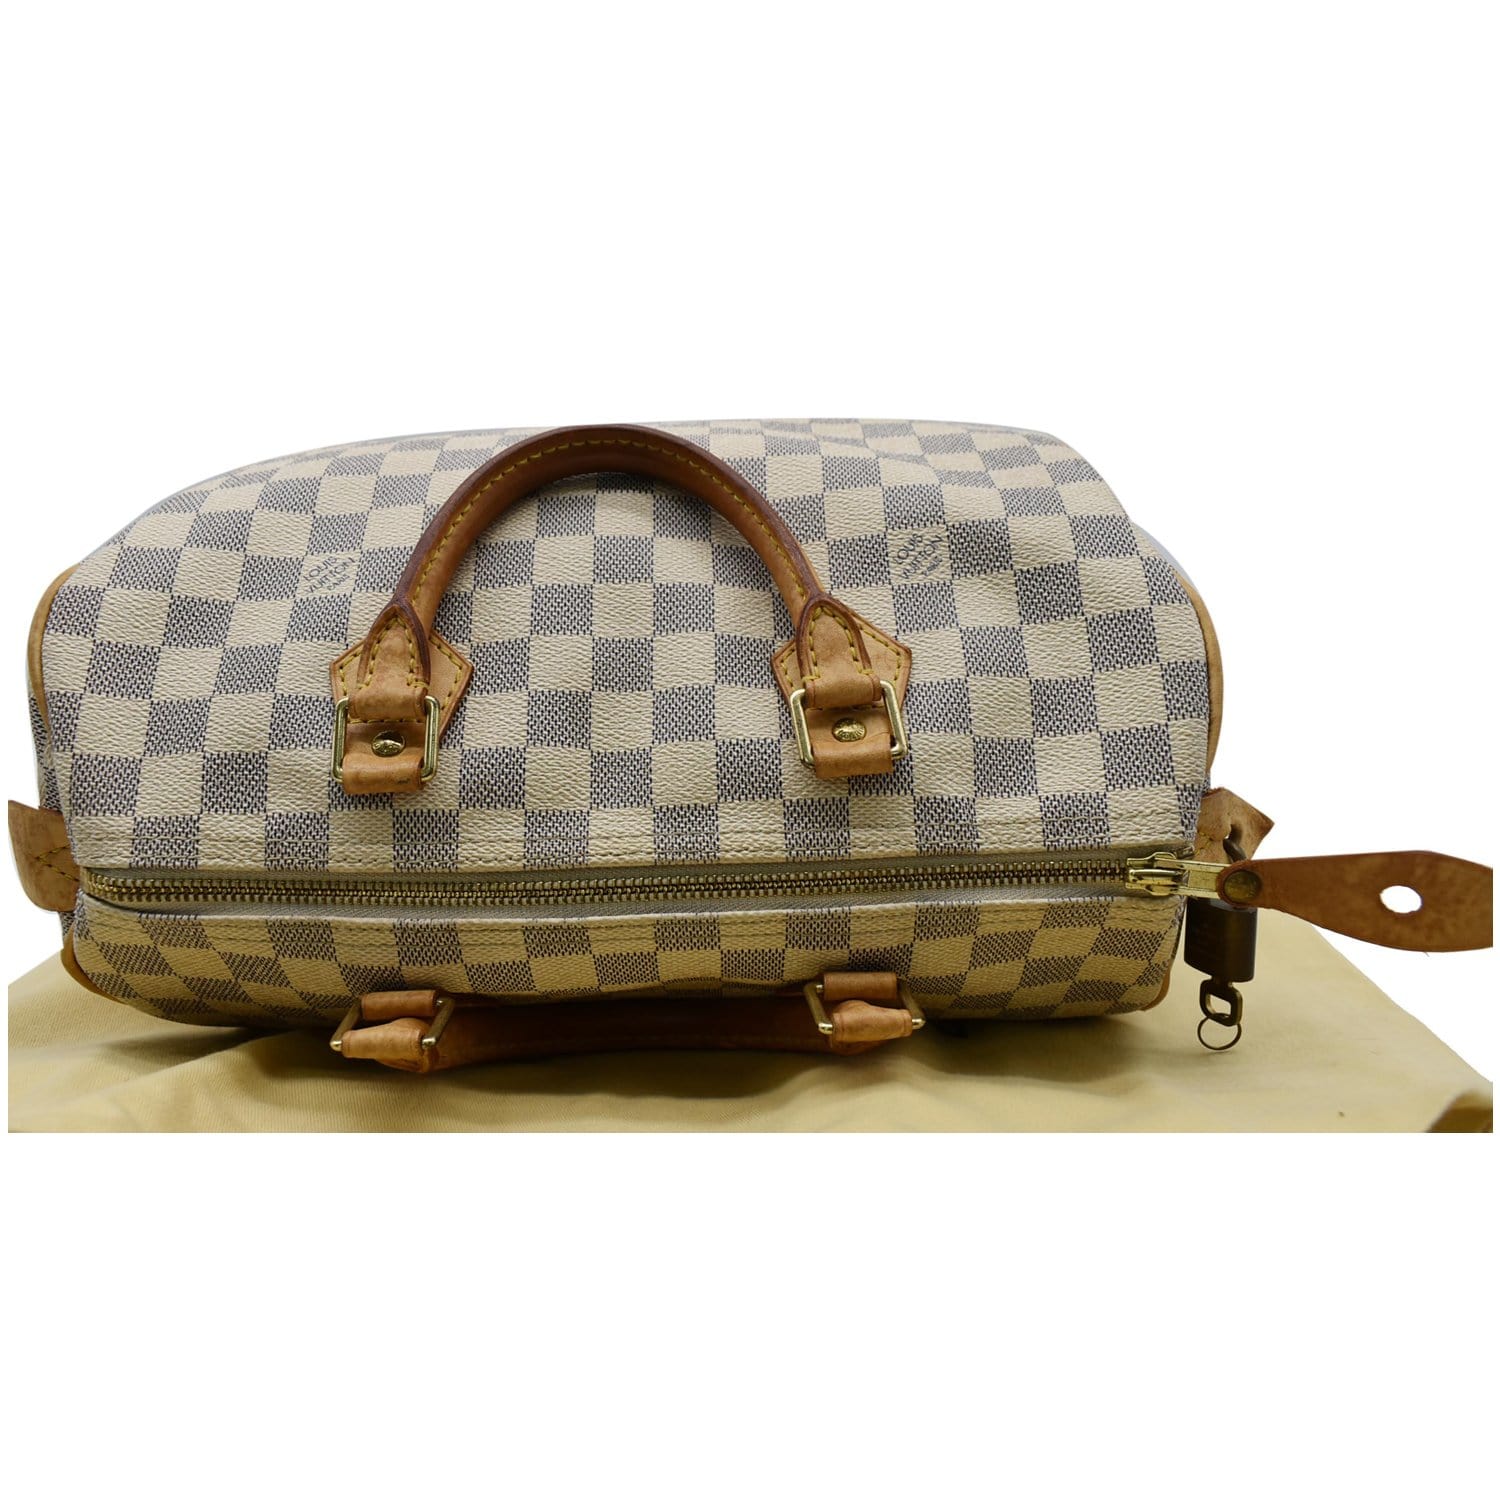 Louis Vuitton Speedy 30 Damier Azur Satchel Bag